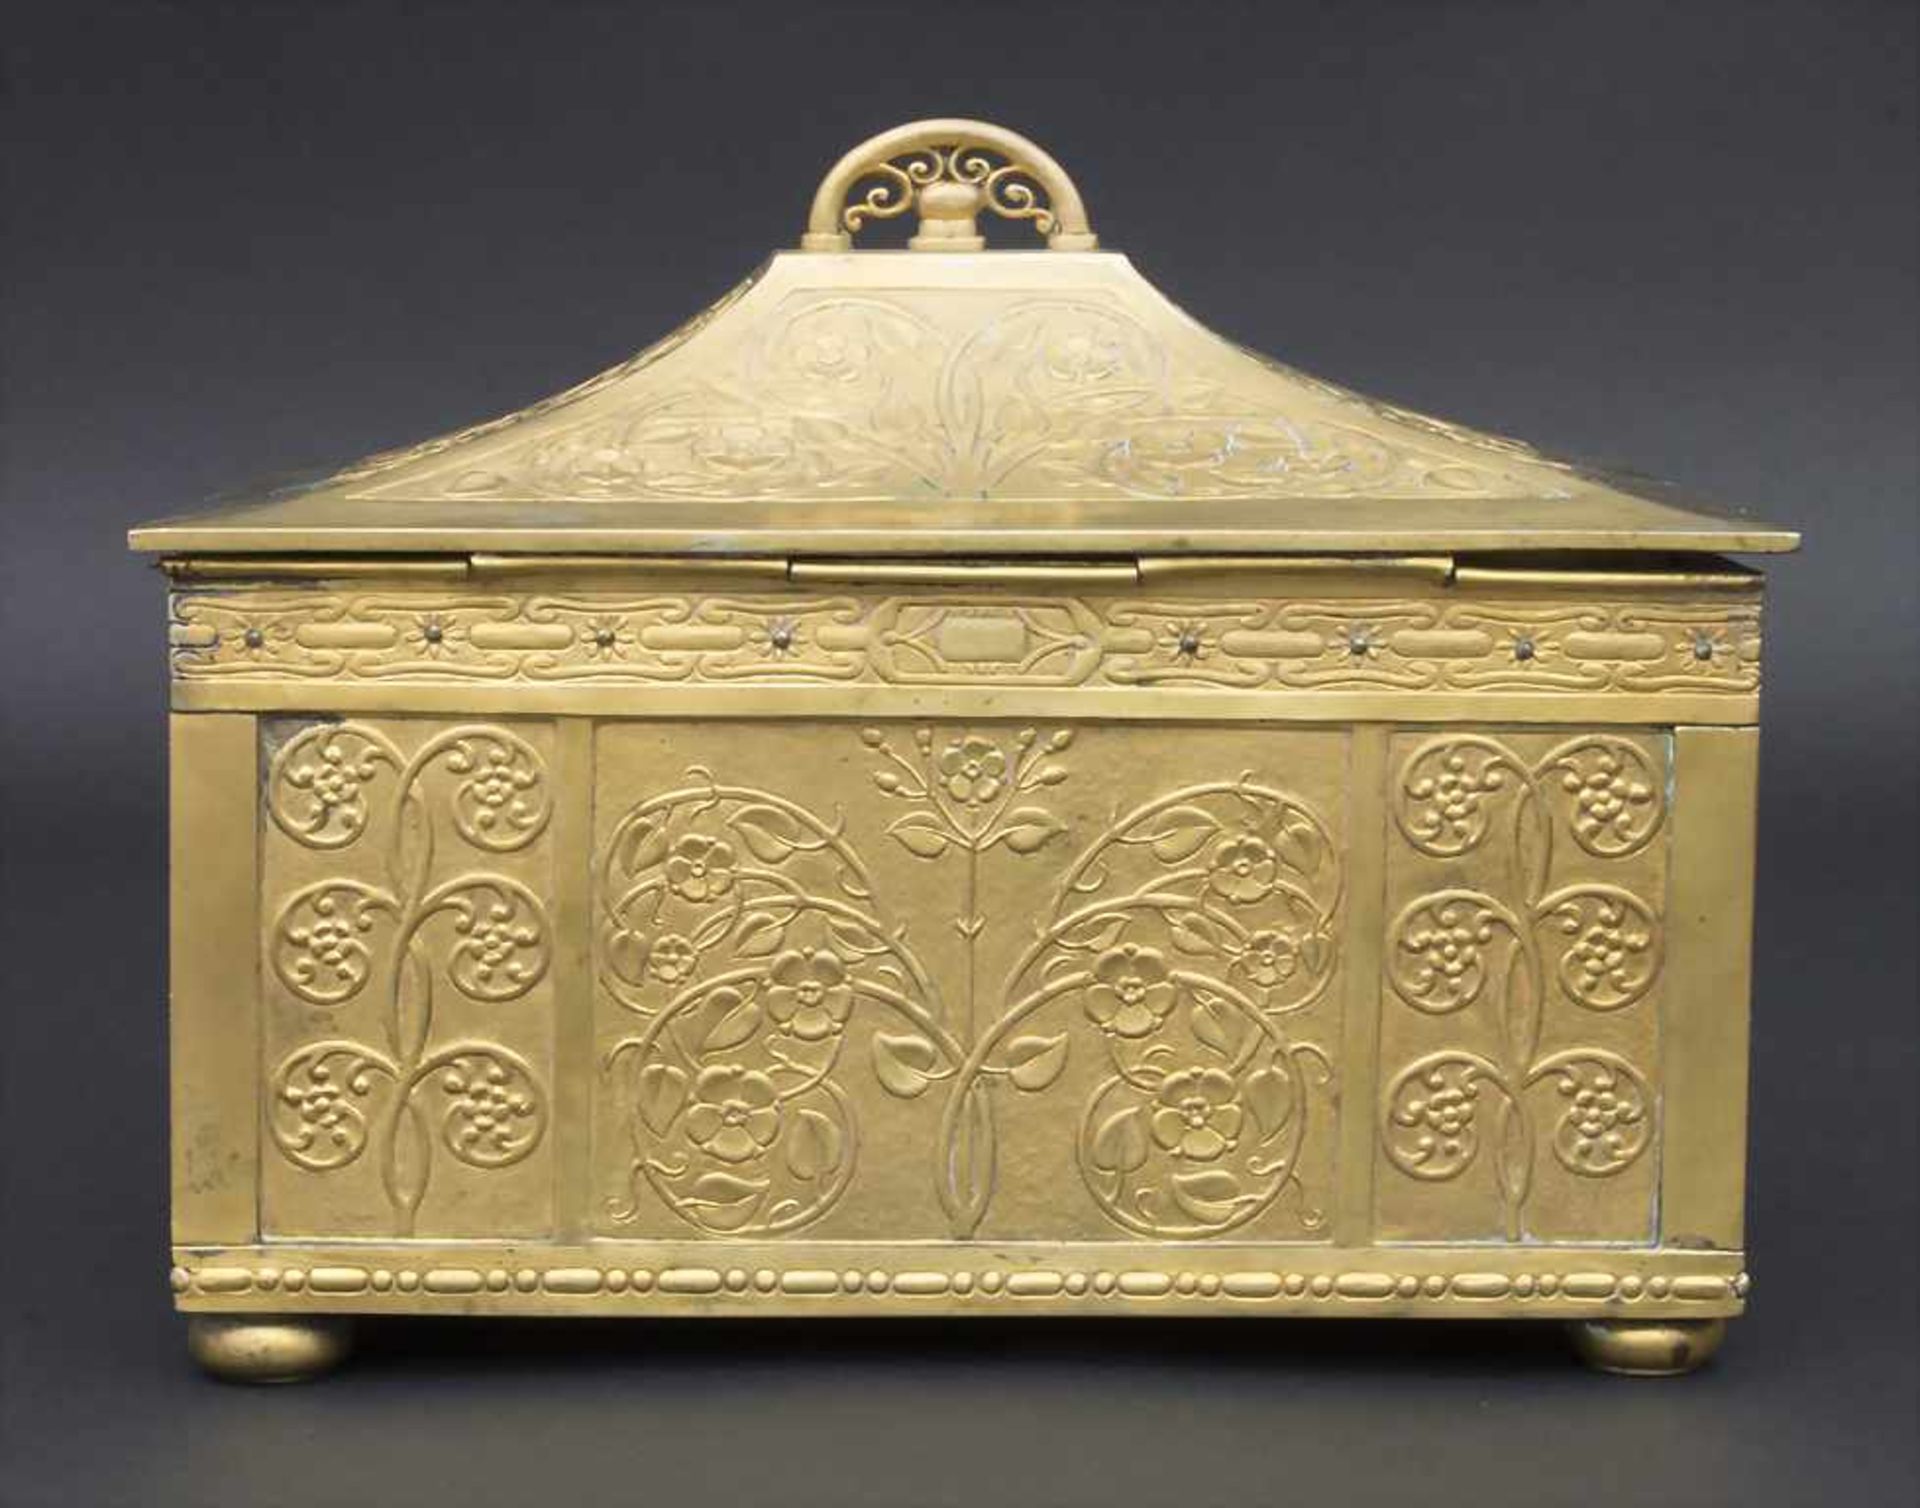 Jugendstil Schmuckschatulle / An Art Nouveau jewellery box, Entwurf wohl Künstlerkolonie - Bild 2 aus 7